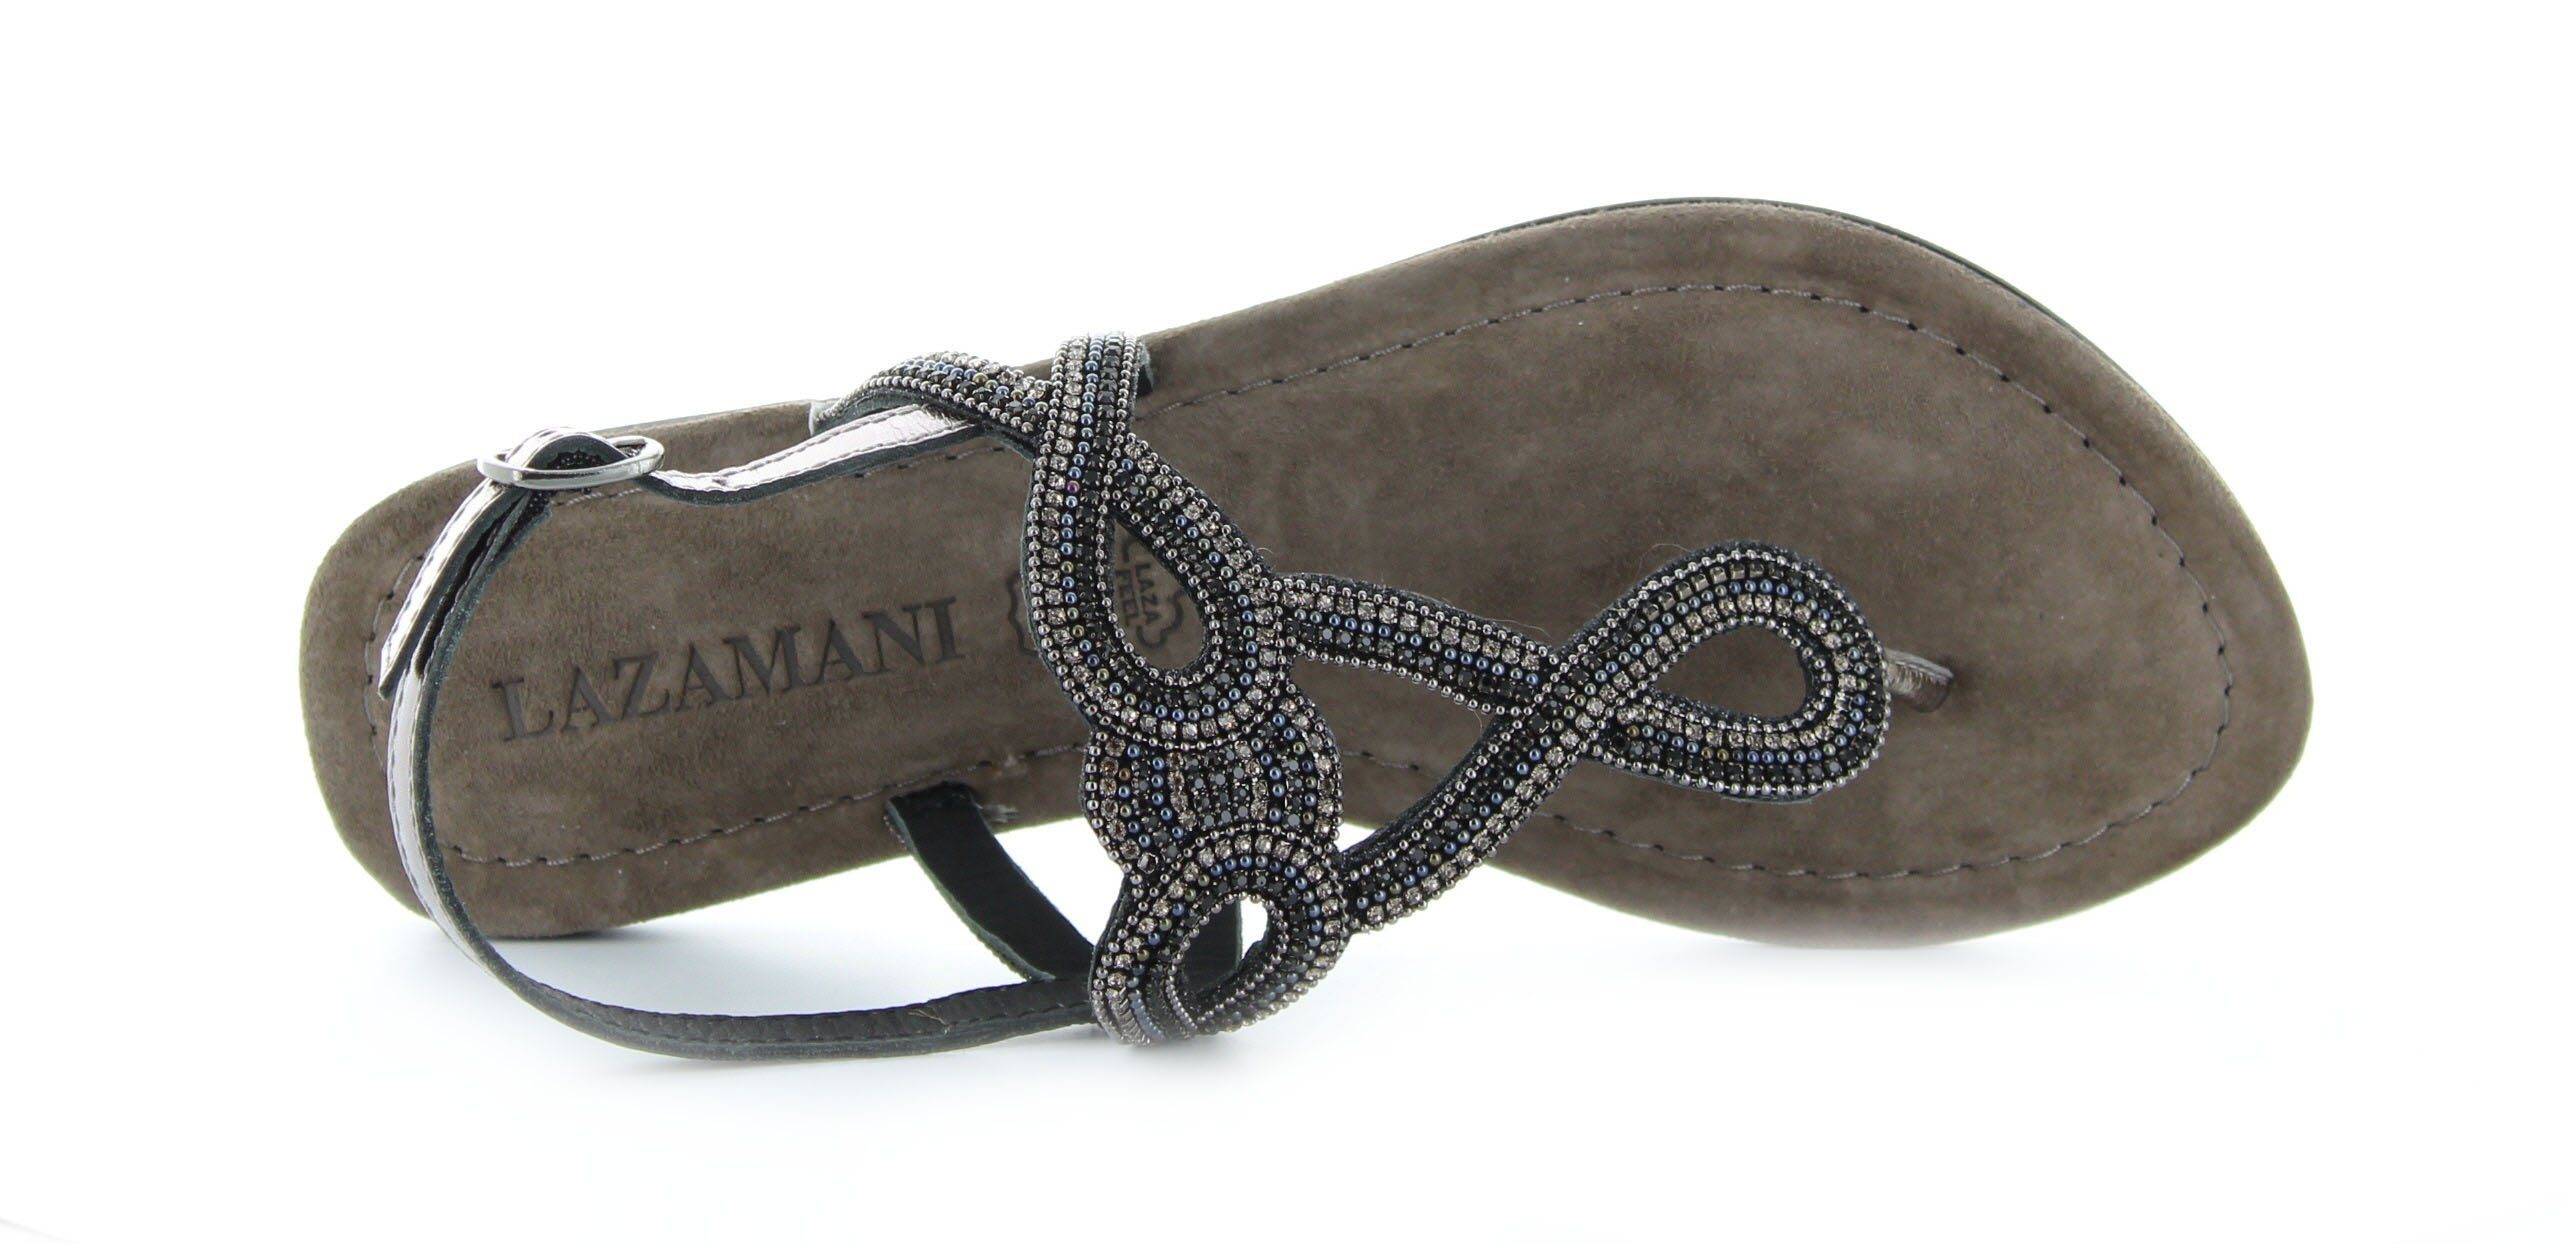 Sandale Bequeme pewter Passform Lazamani